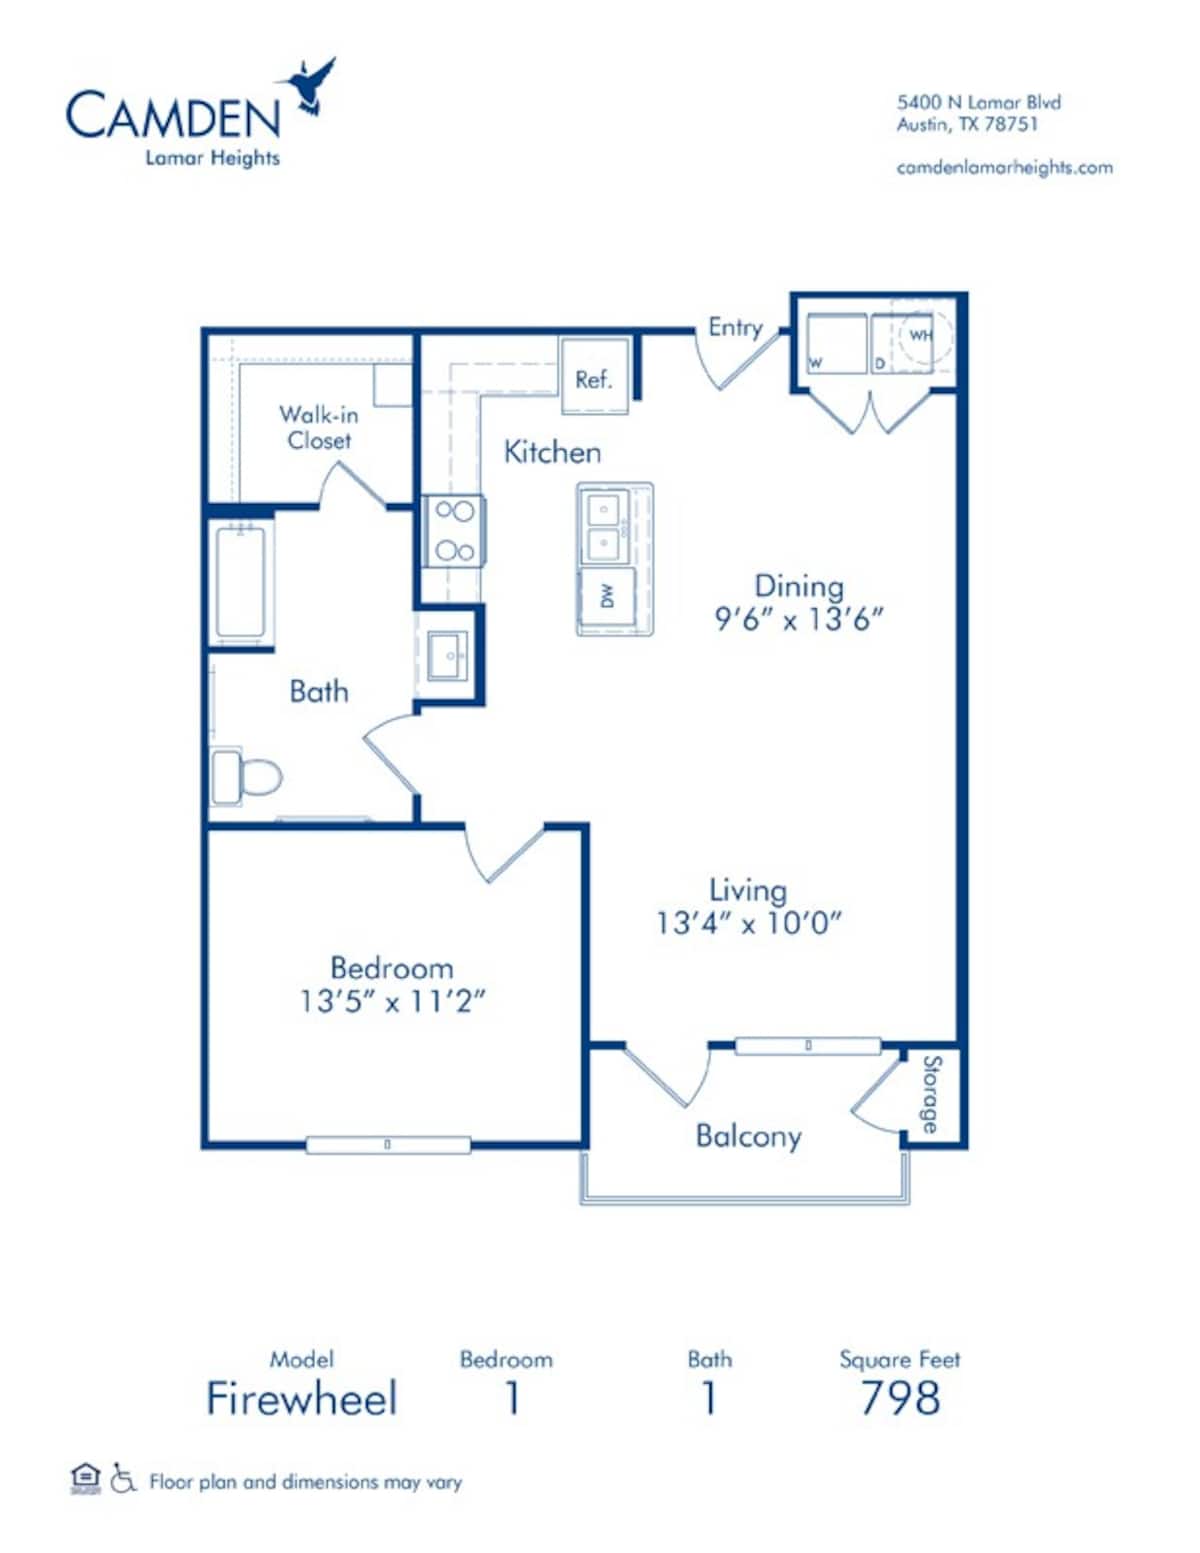 Floorplan diagram for Firewheel, showing 1 bedroom